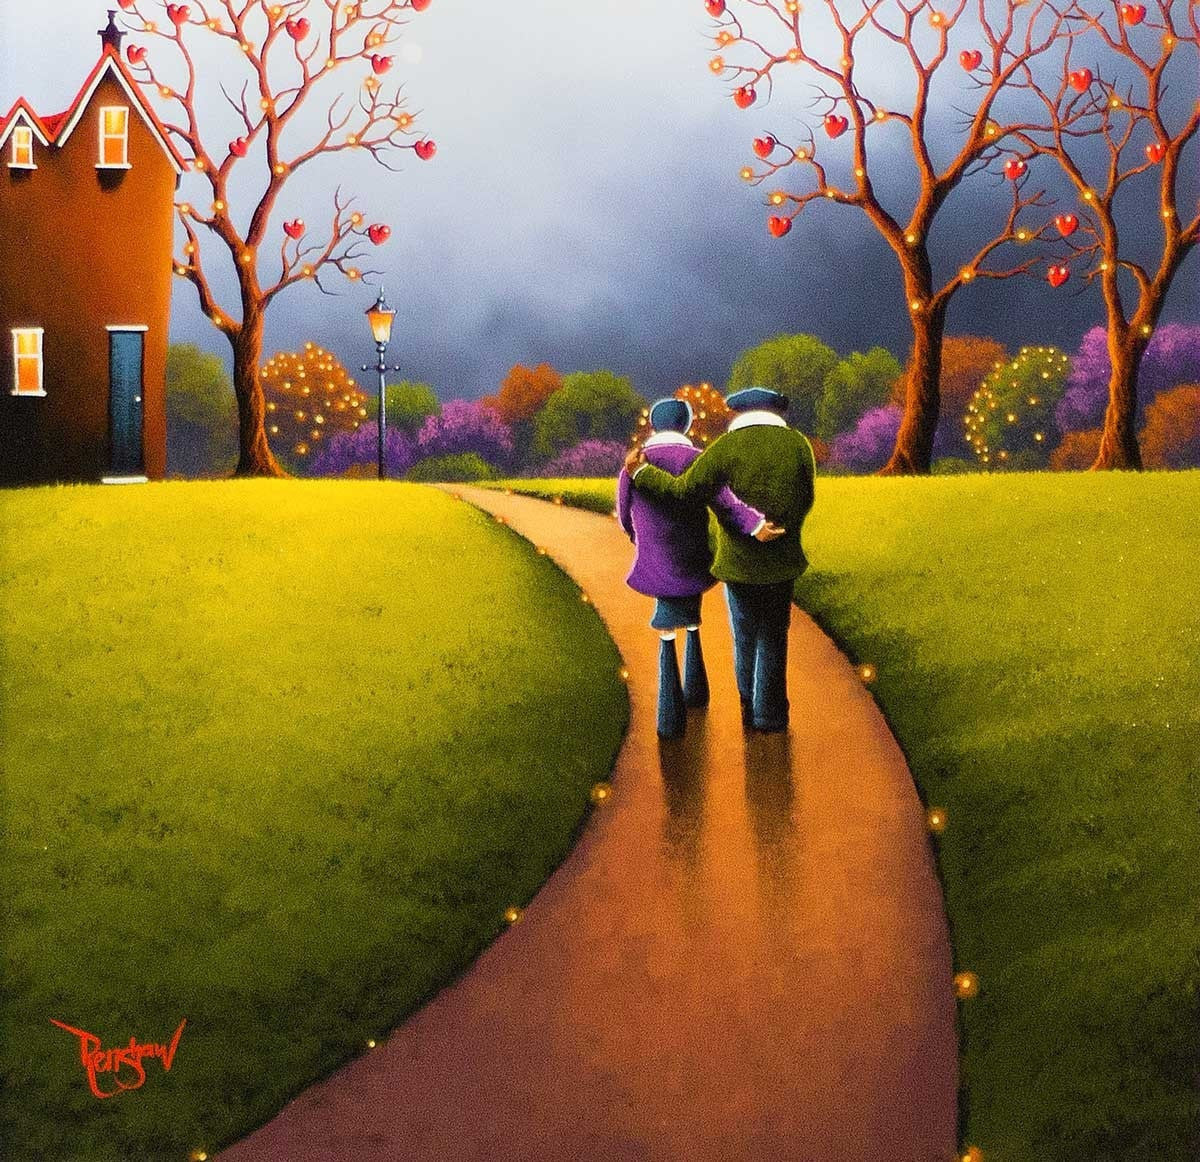 A Walk With You - SOLD David Renshaw